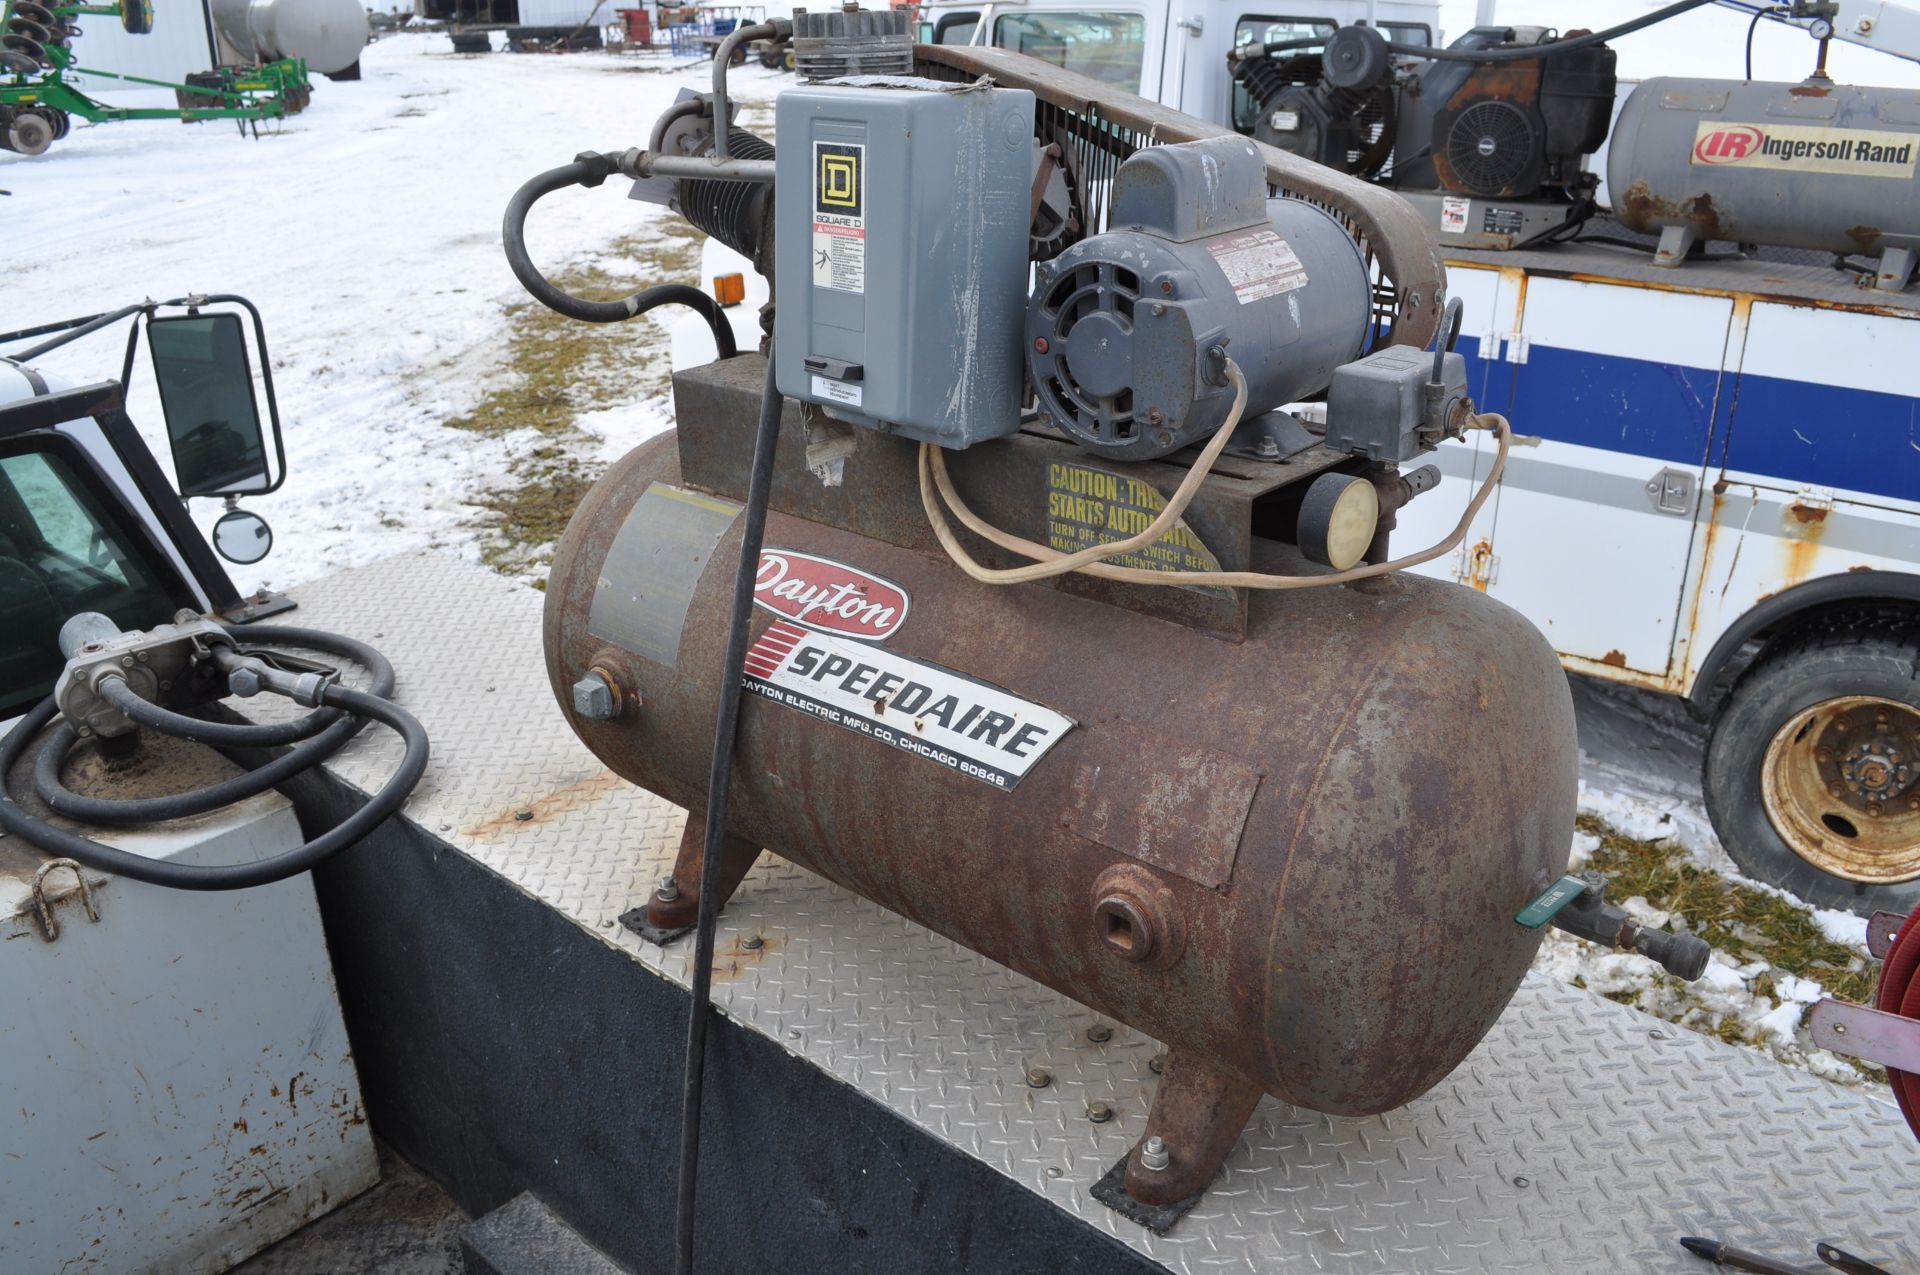 Dayton 220 volt air compressor